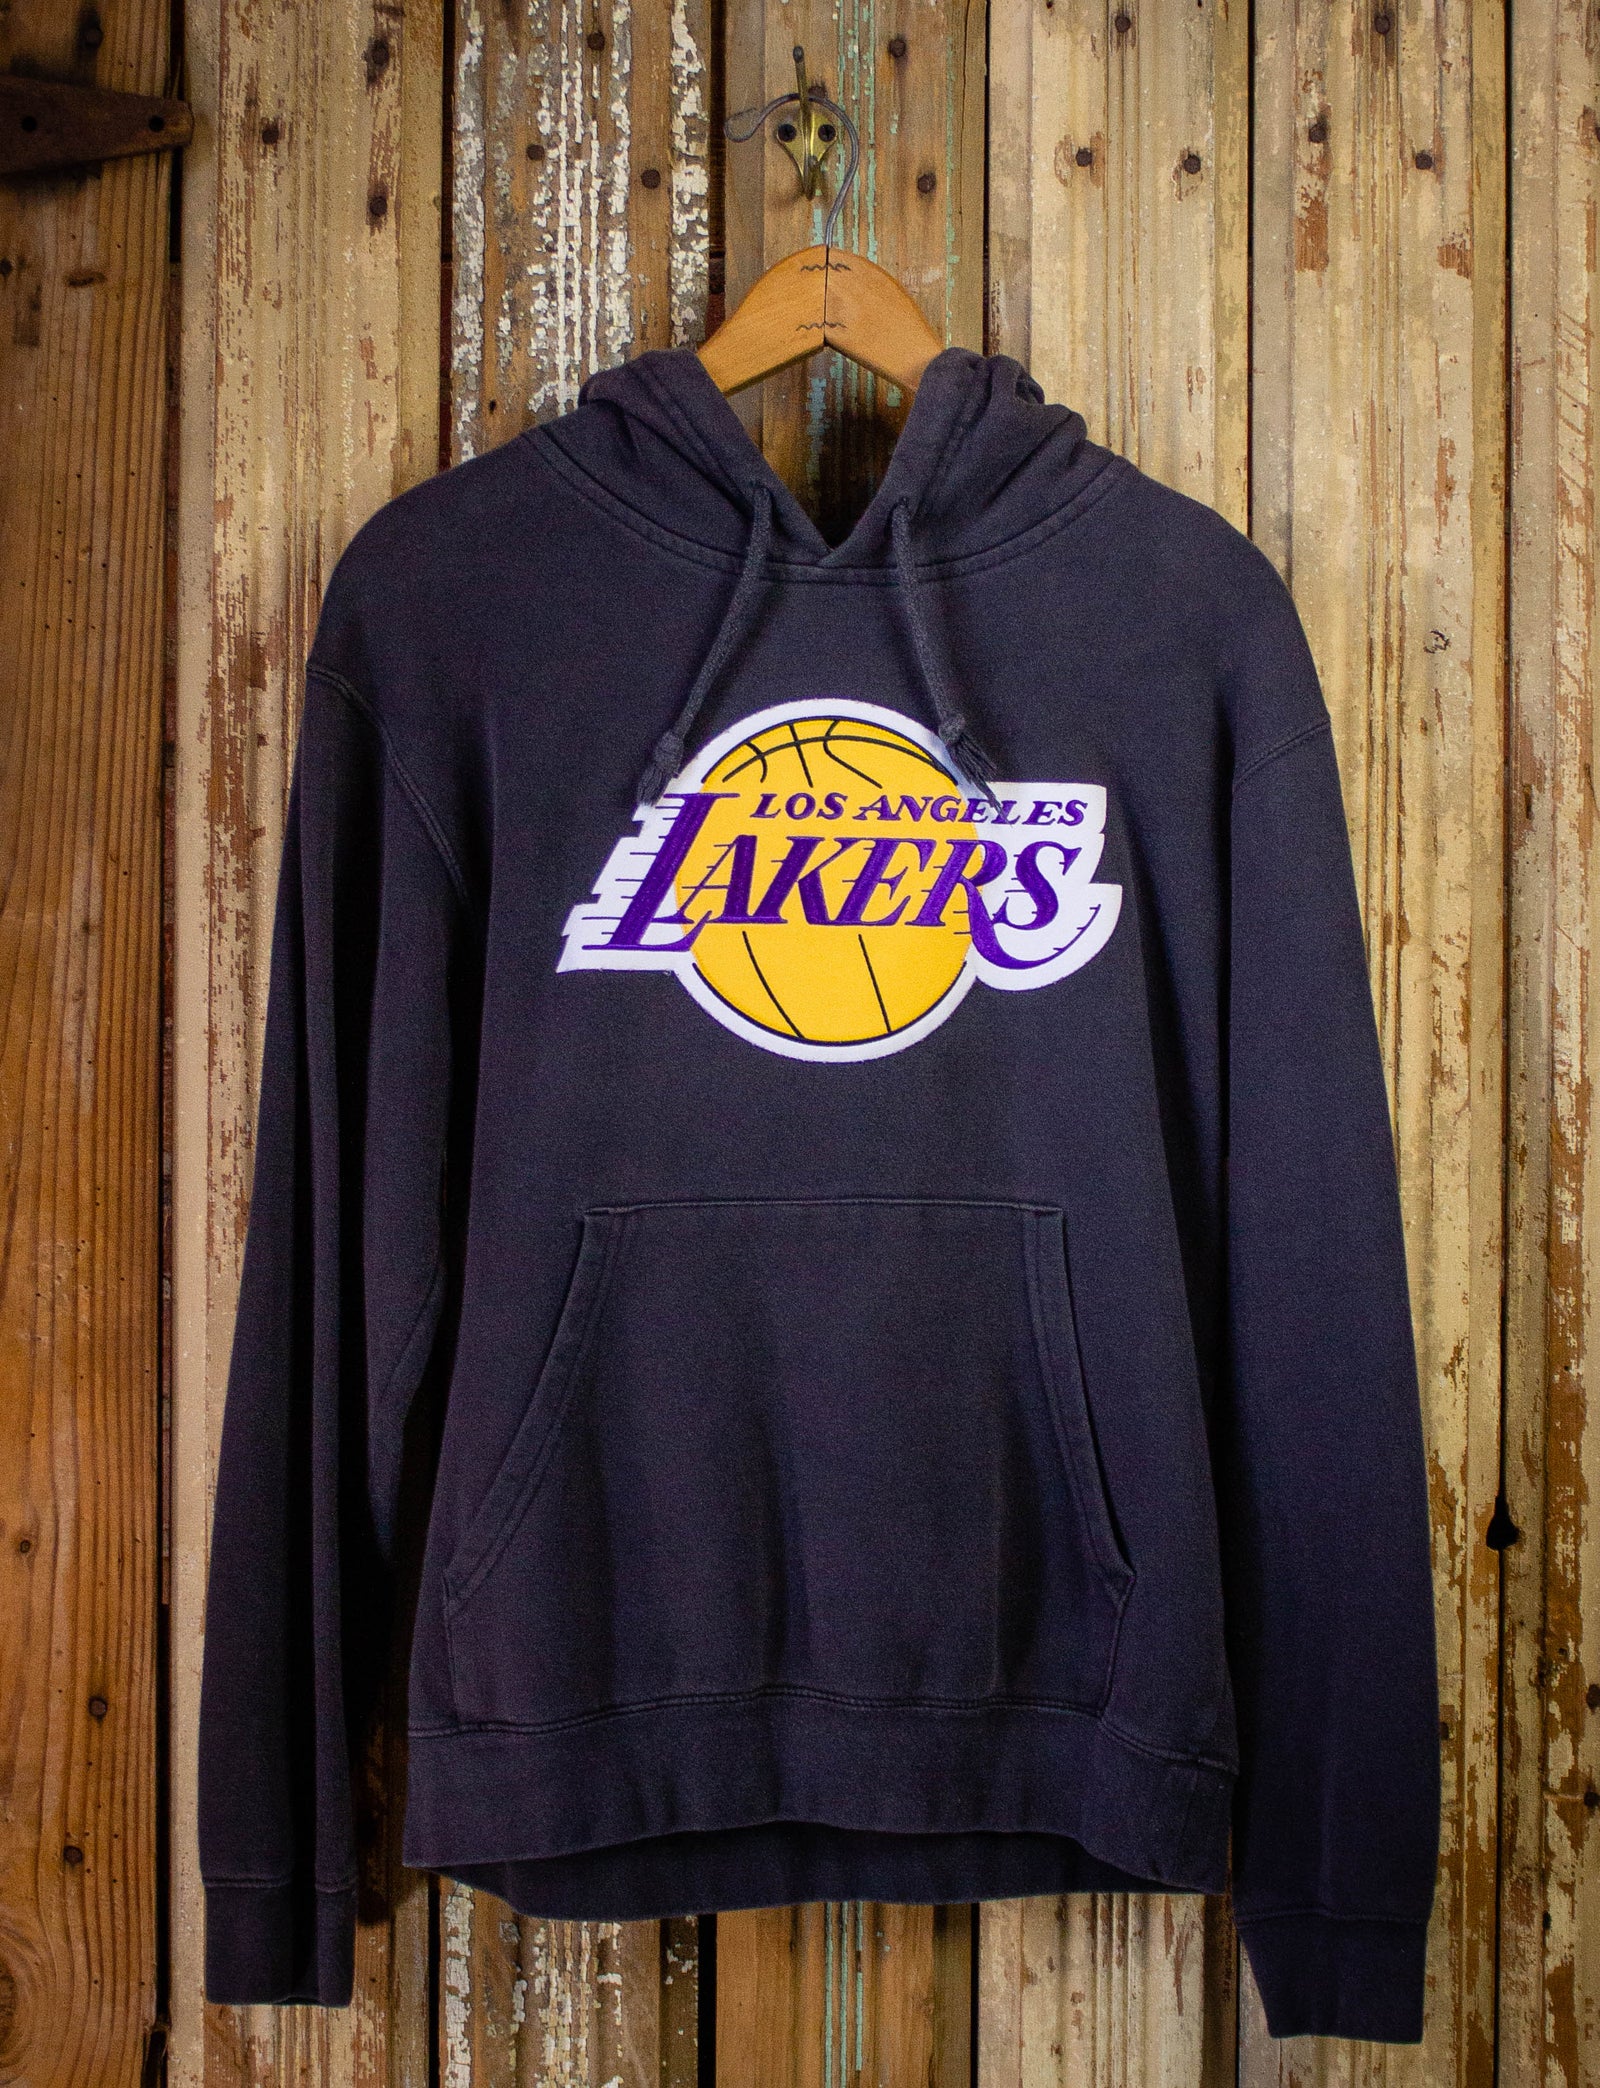 Best Selling Product] Los Angeles Lakers New Version Hoodie Dress